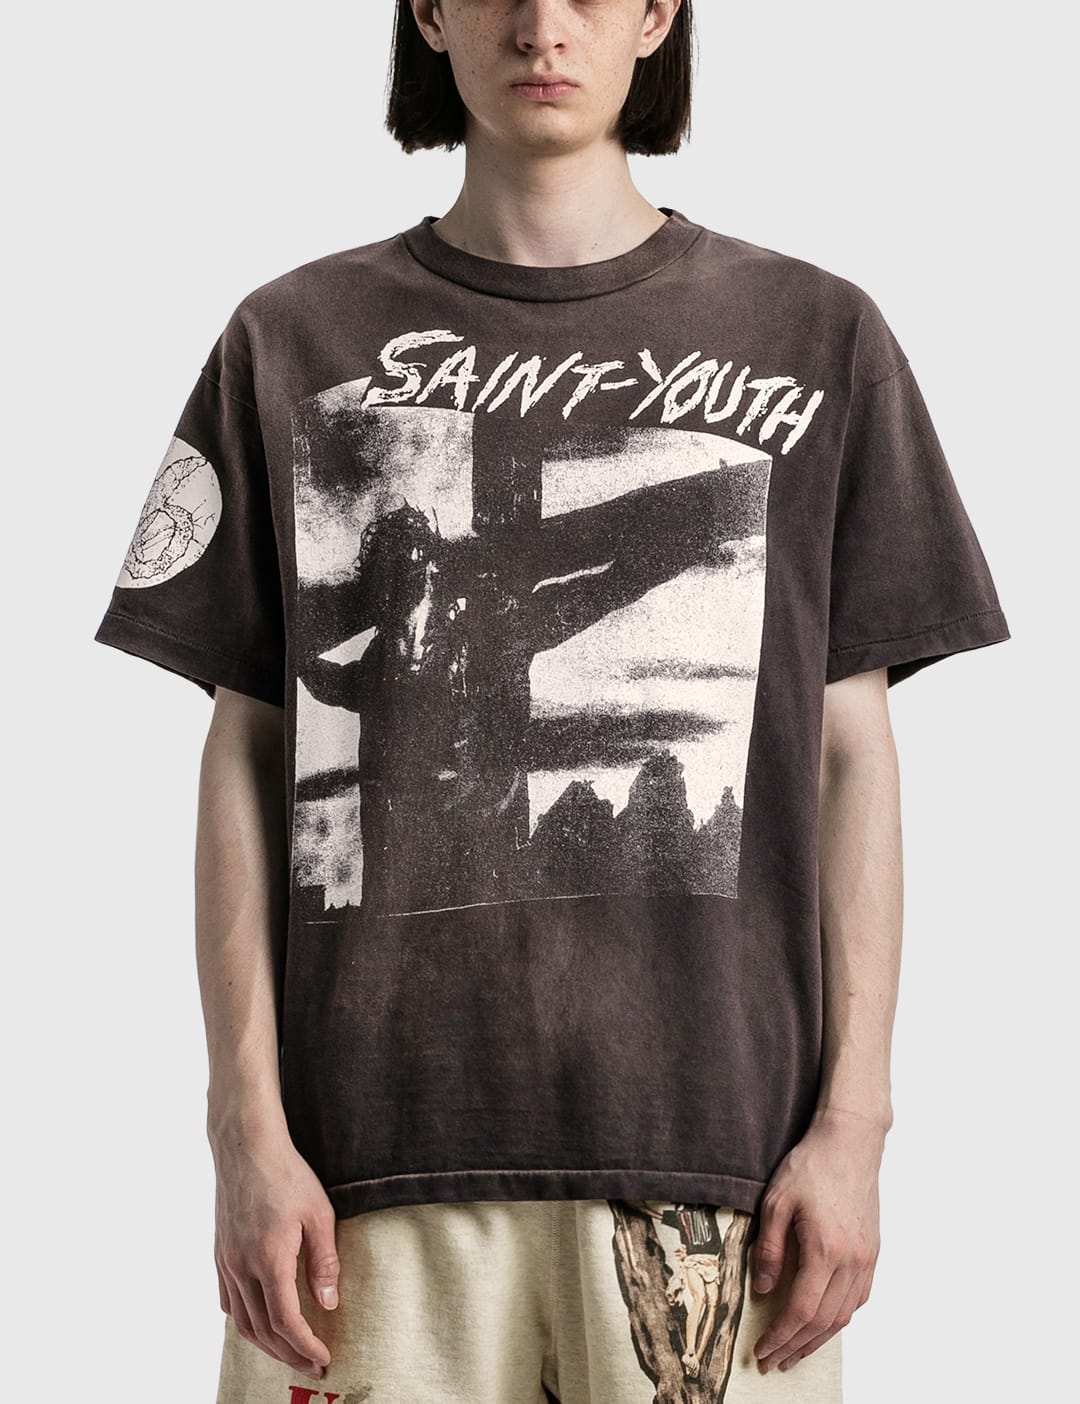 Saint Michael - MX6 Tシャツ | HBX - ハイプビースト(Hypebeast)が ...